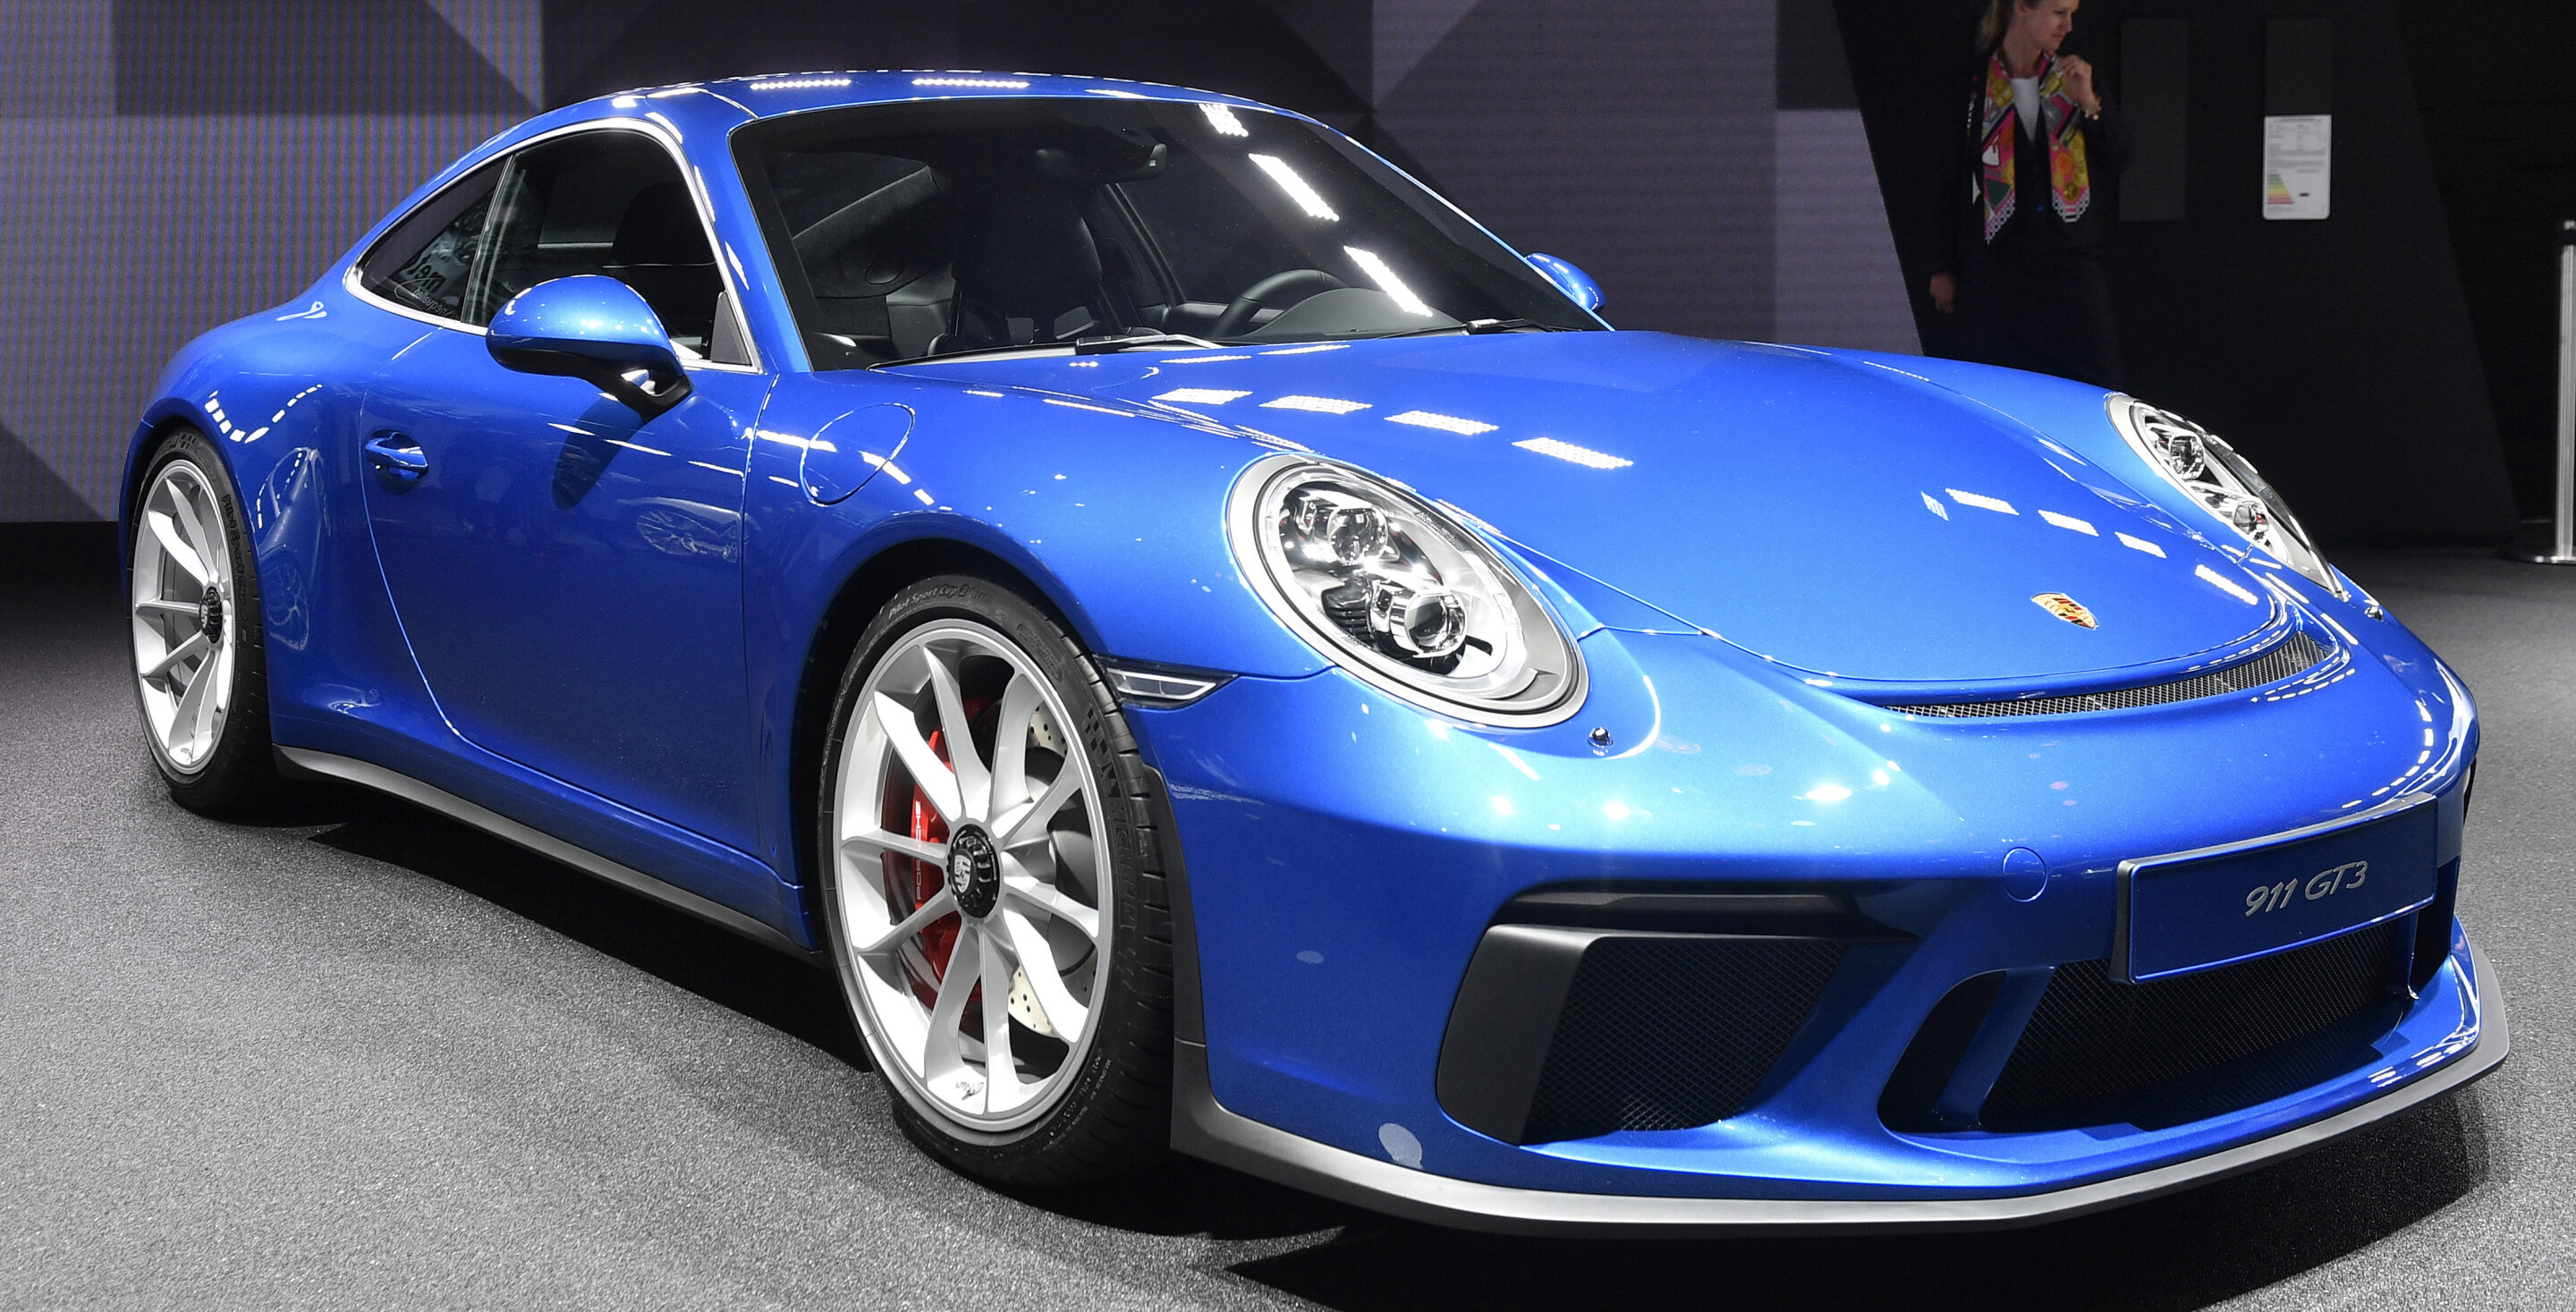 Volkswagen’s offering of Porsche shares nears completion